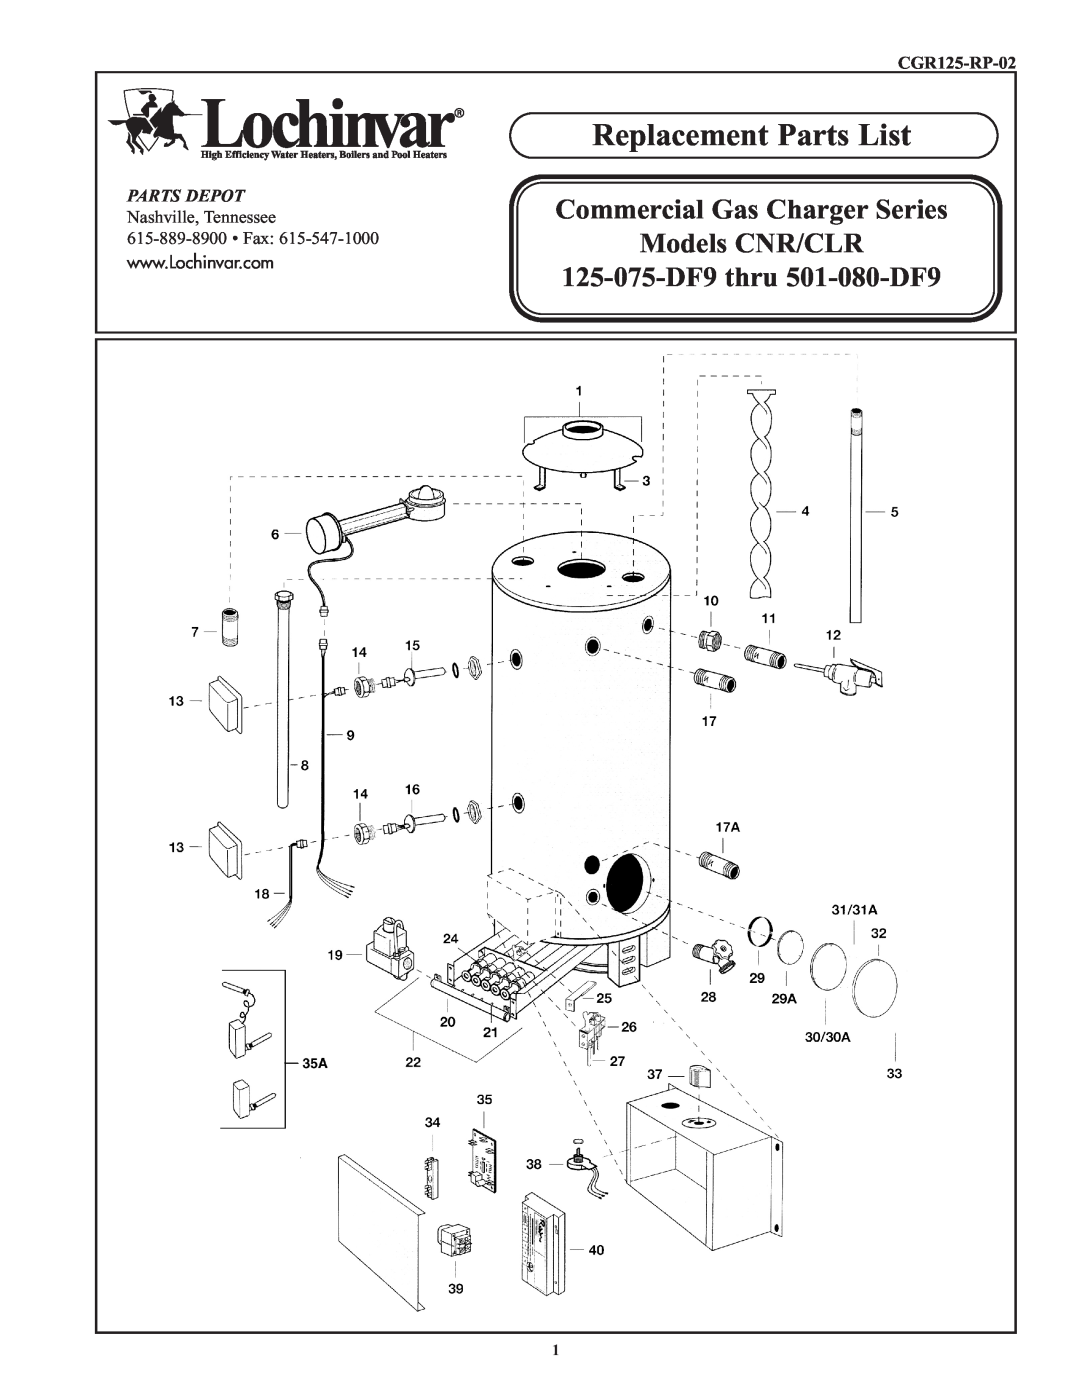 Lochinvar CLR 125-075-DF9 thru 501-080-DF9 manual Replacement Parts List, Commercial Gas Charger Series Models CNR/CLR 